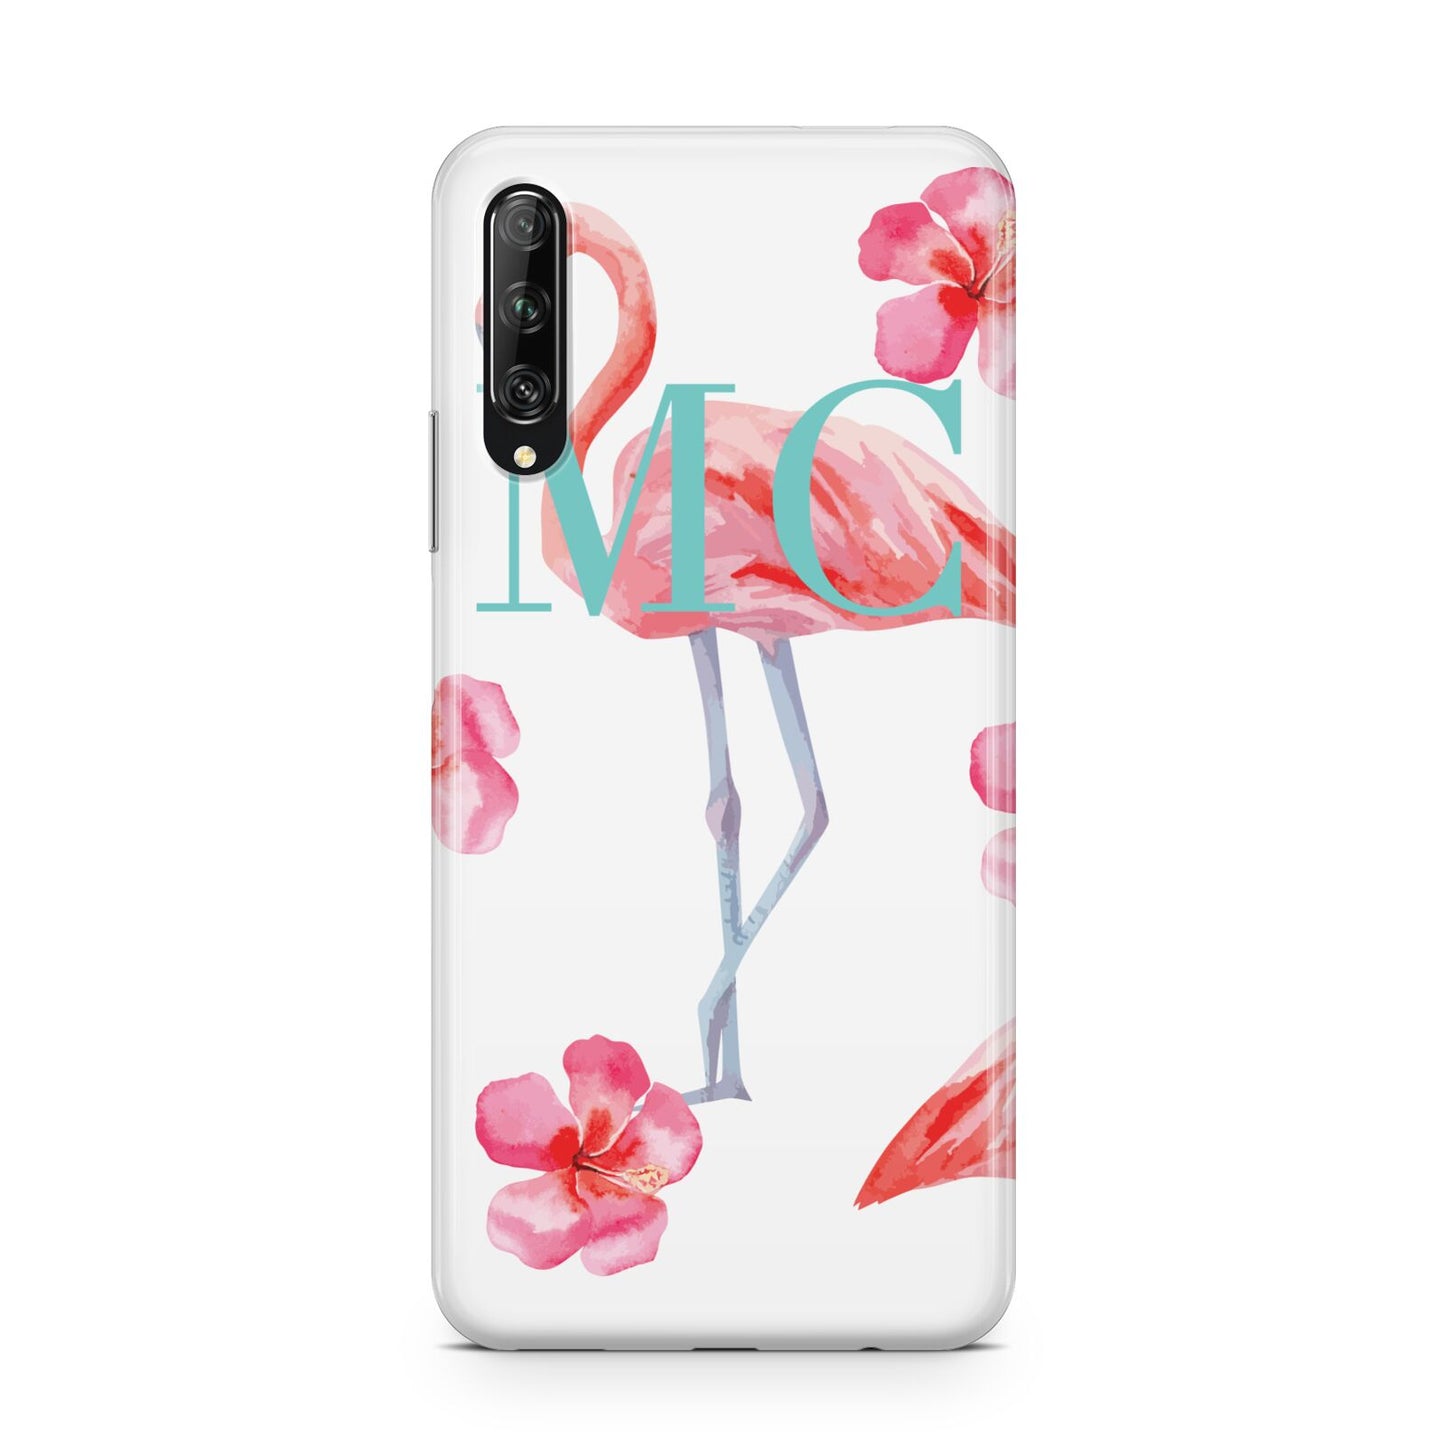 Personalised Initials Flamingo 3 Huawei P Smart Pro 2019